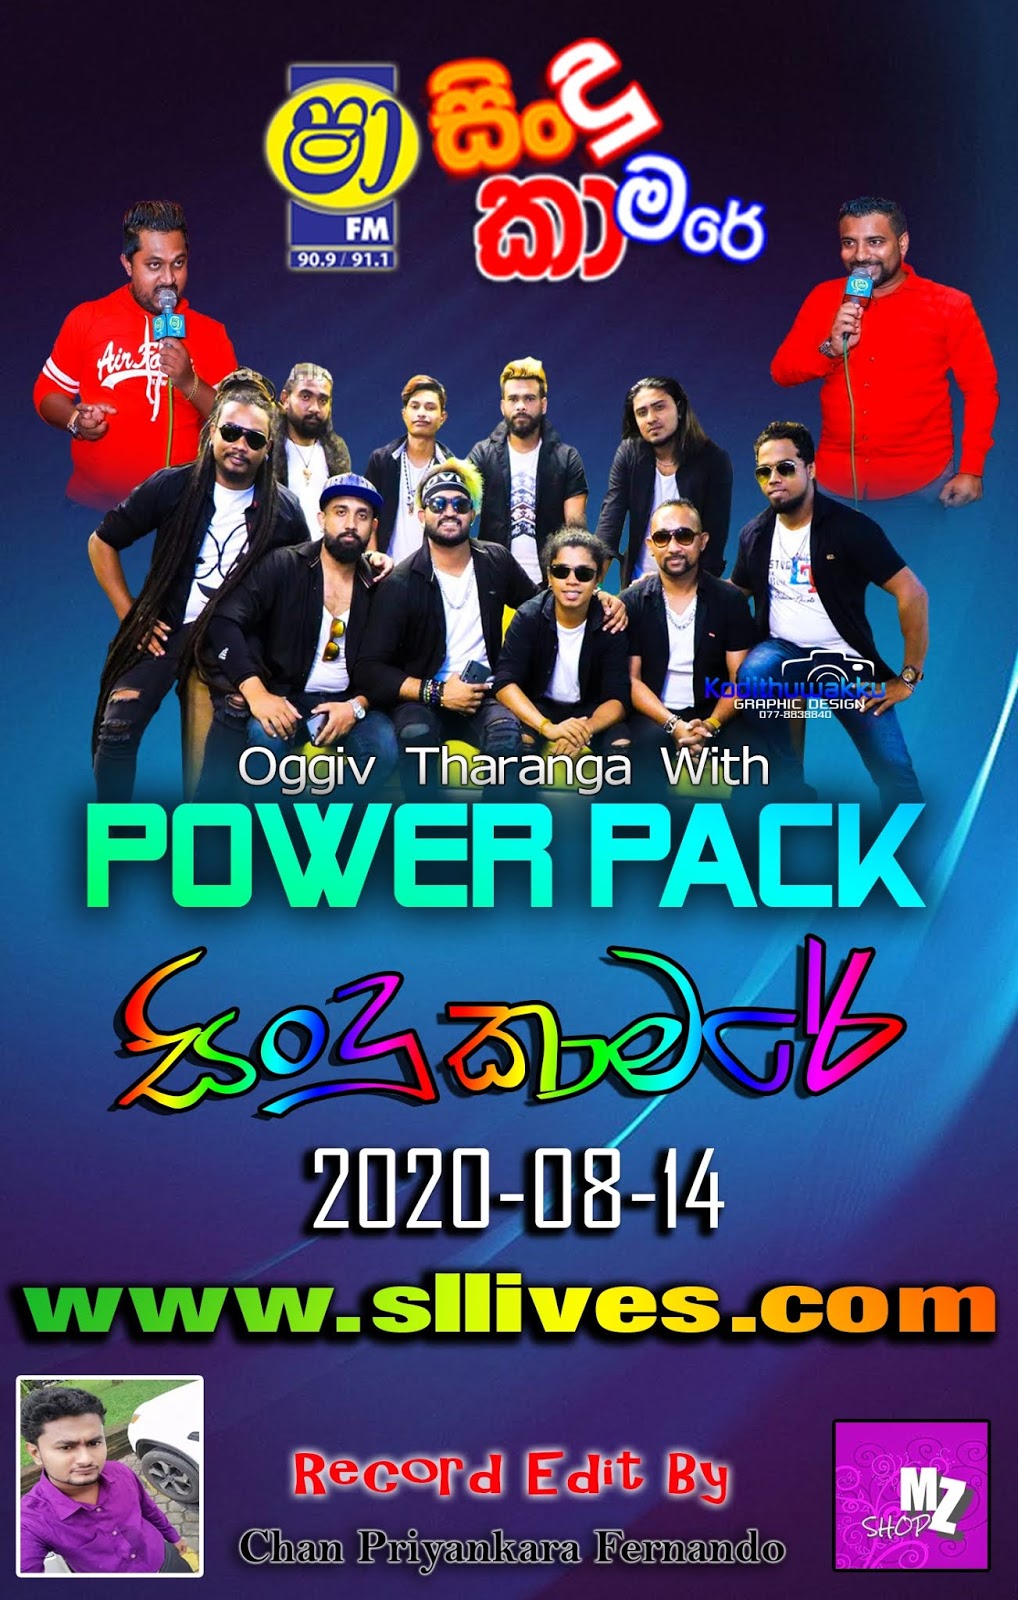 Shaa Fm Sindu Kamare With Power Pack 2020 08 14 Www Sllives Com